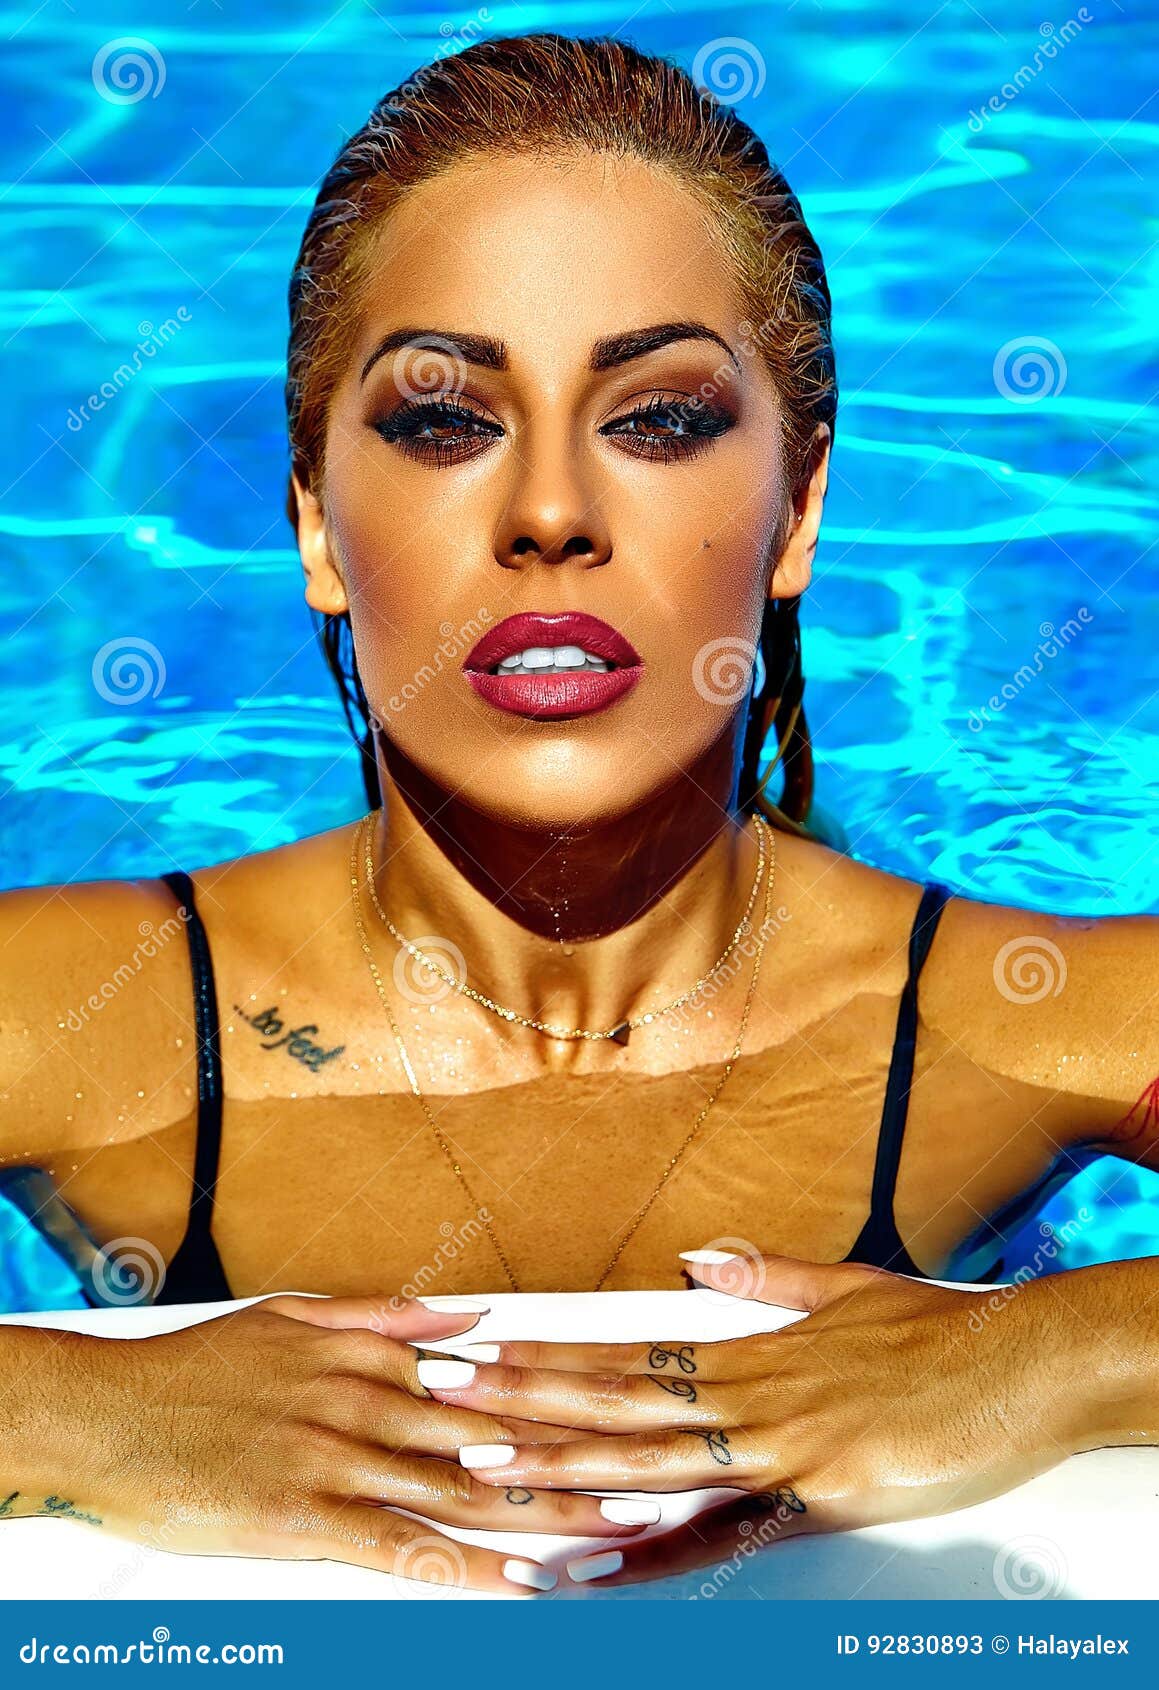 Hot Beautiful Girl Blonde Model In Swimwear Stock Image